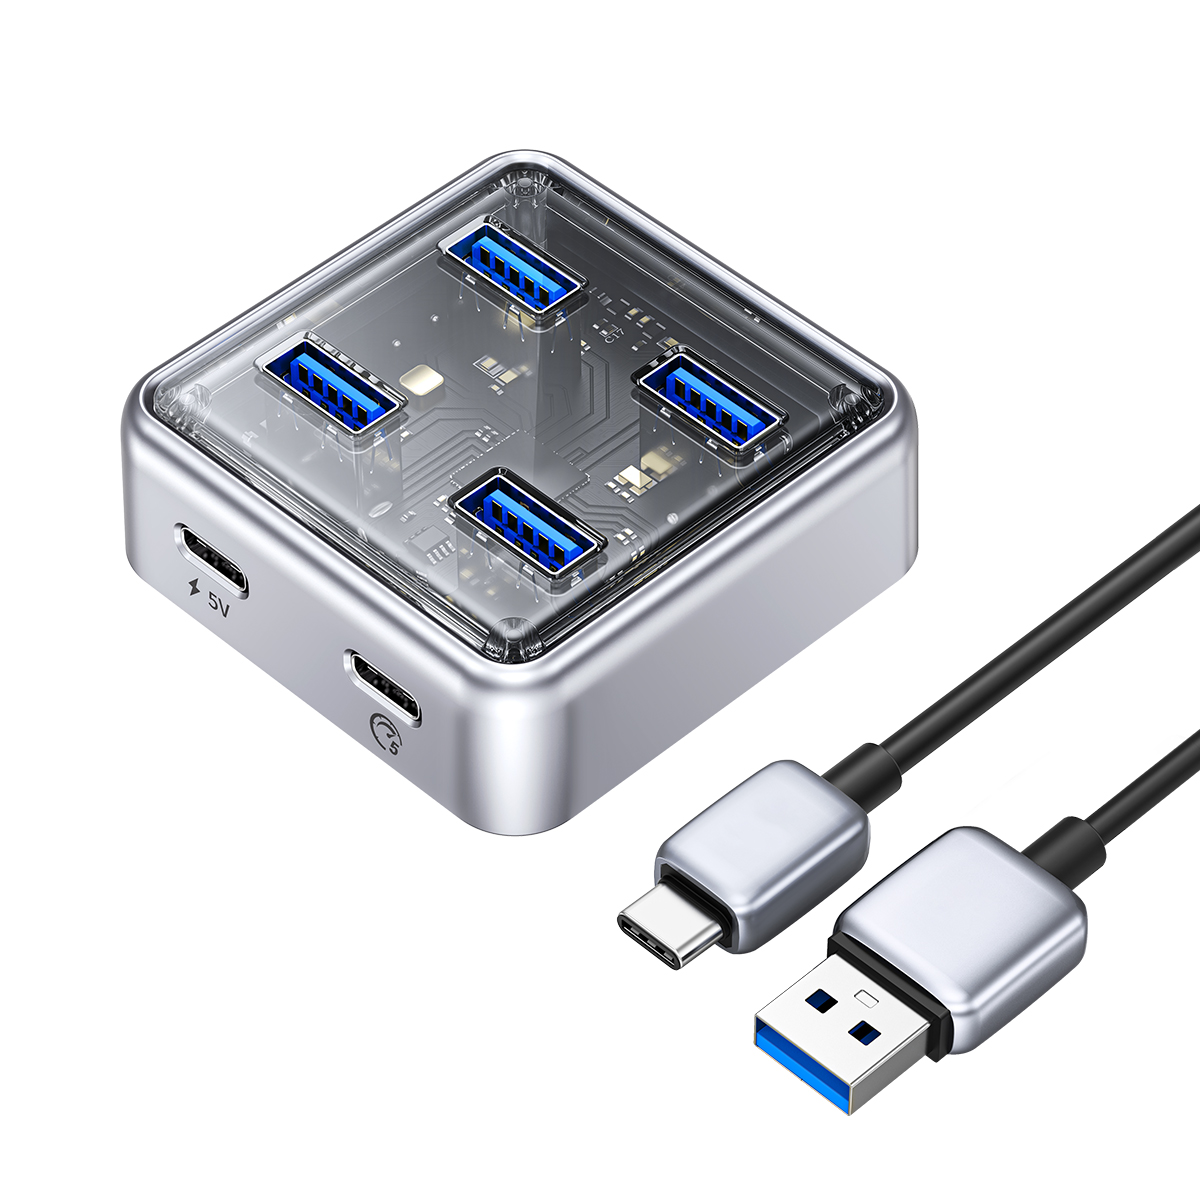 ORICO USB 3.0 Hub, USB Hub Clamp, Aluminum 4-Port USB Splitter with Extra  Power Supply Port and 4.92 FT USB Data Cable, Desktop Powered USB Hub for